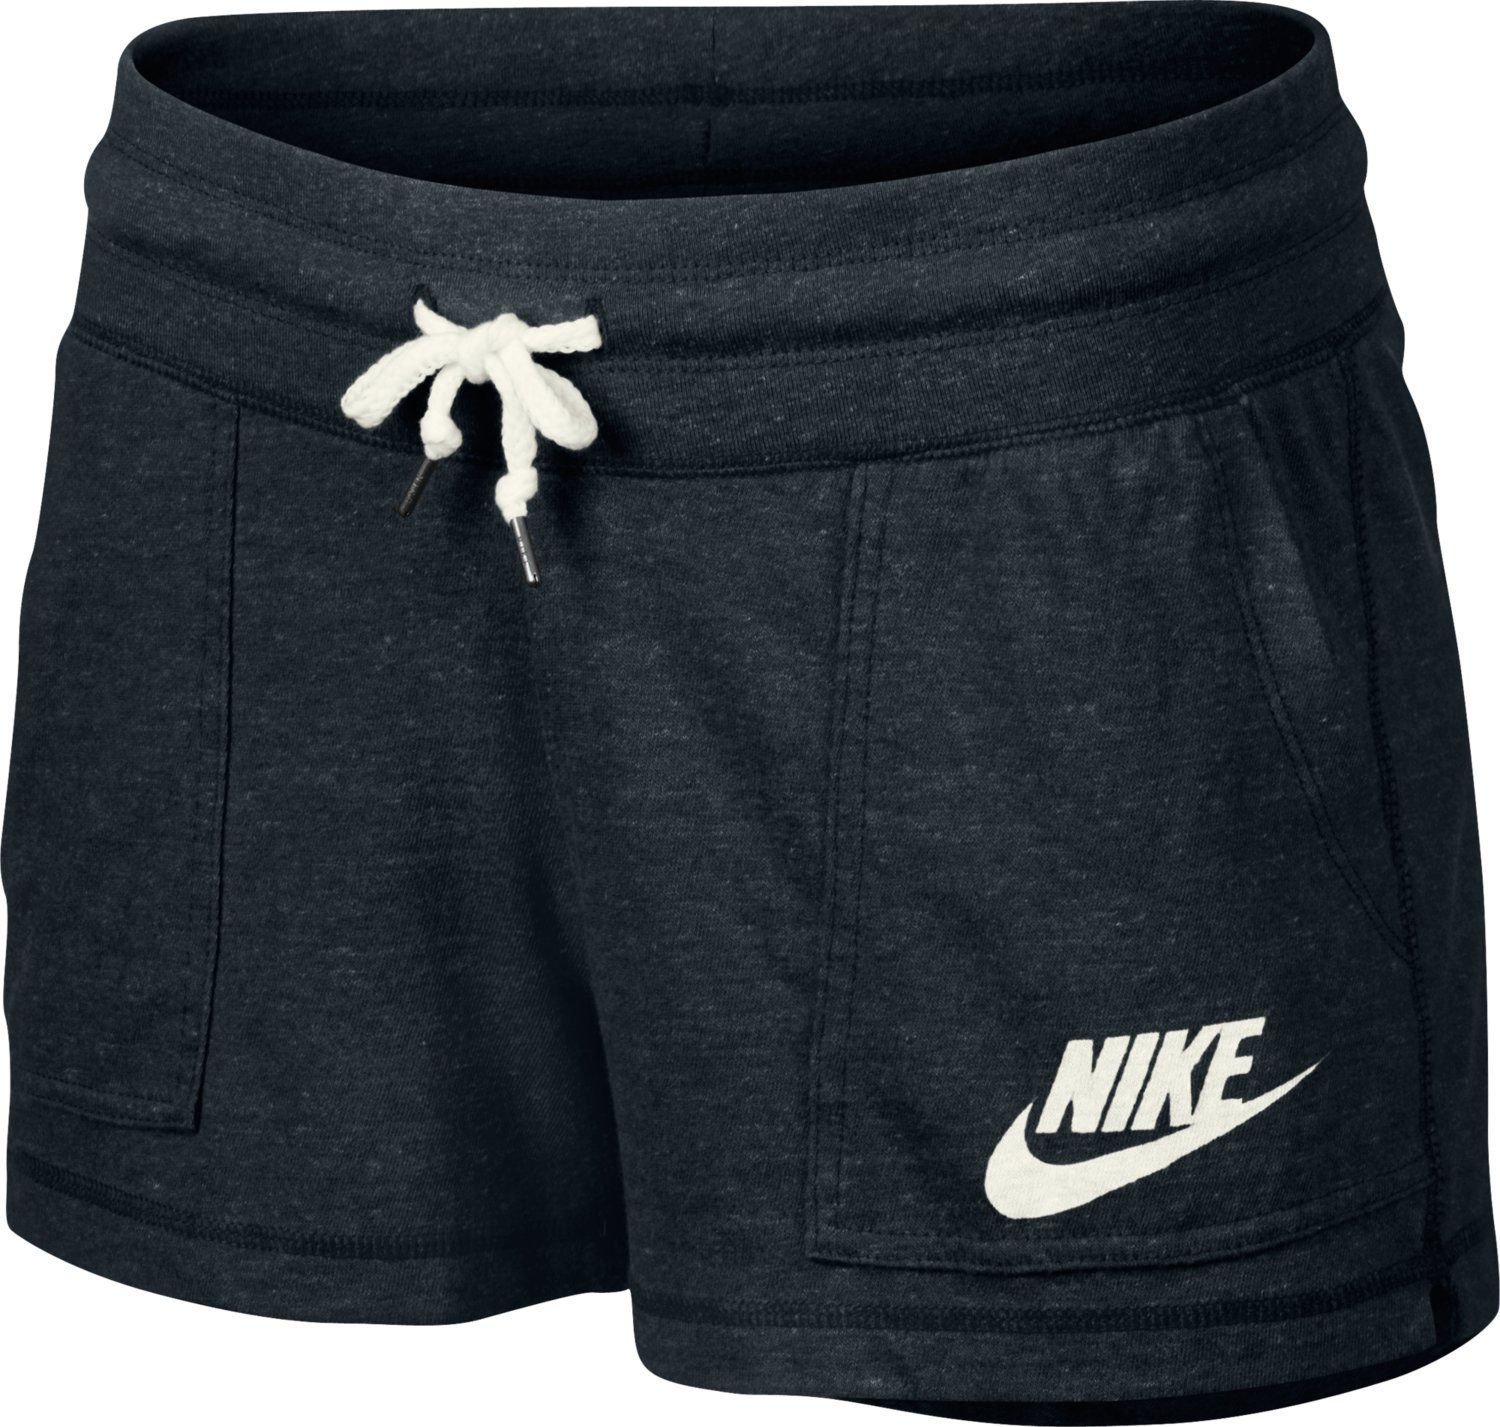 Gym shorts. Шорты найк шуз. Шорты Nike Fit l Винтаж. Шорты найк лот 7181. Шорты Nike Team LUFC Vintage.